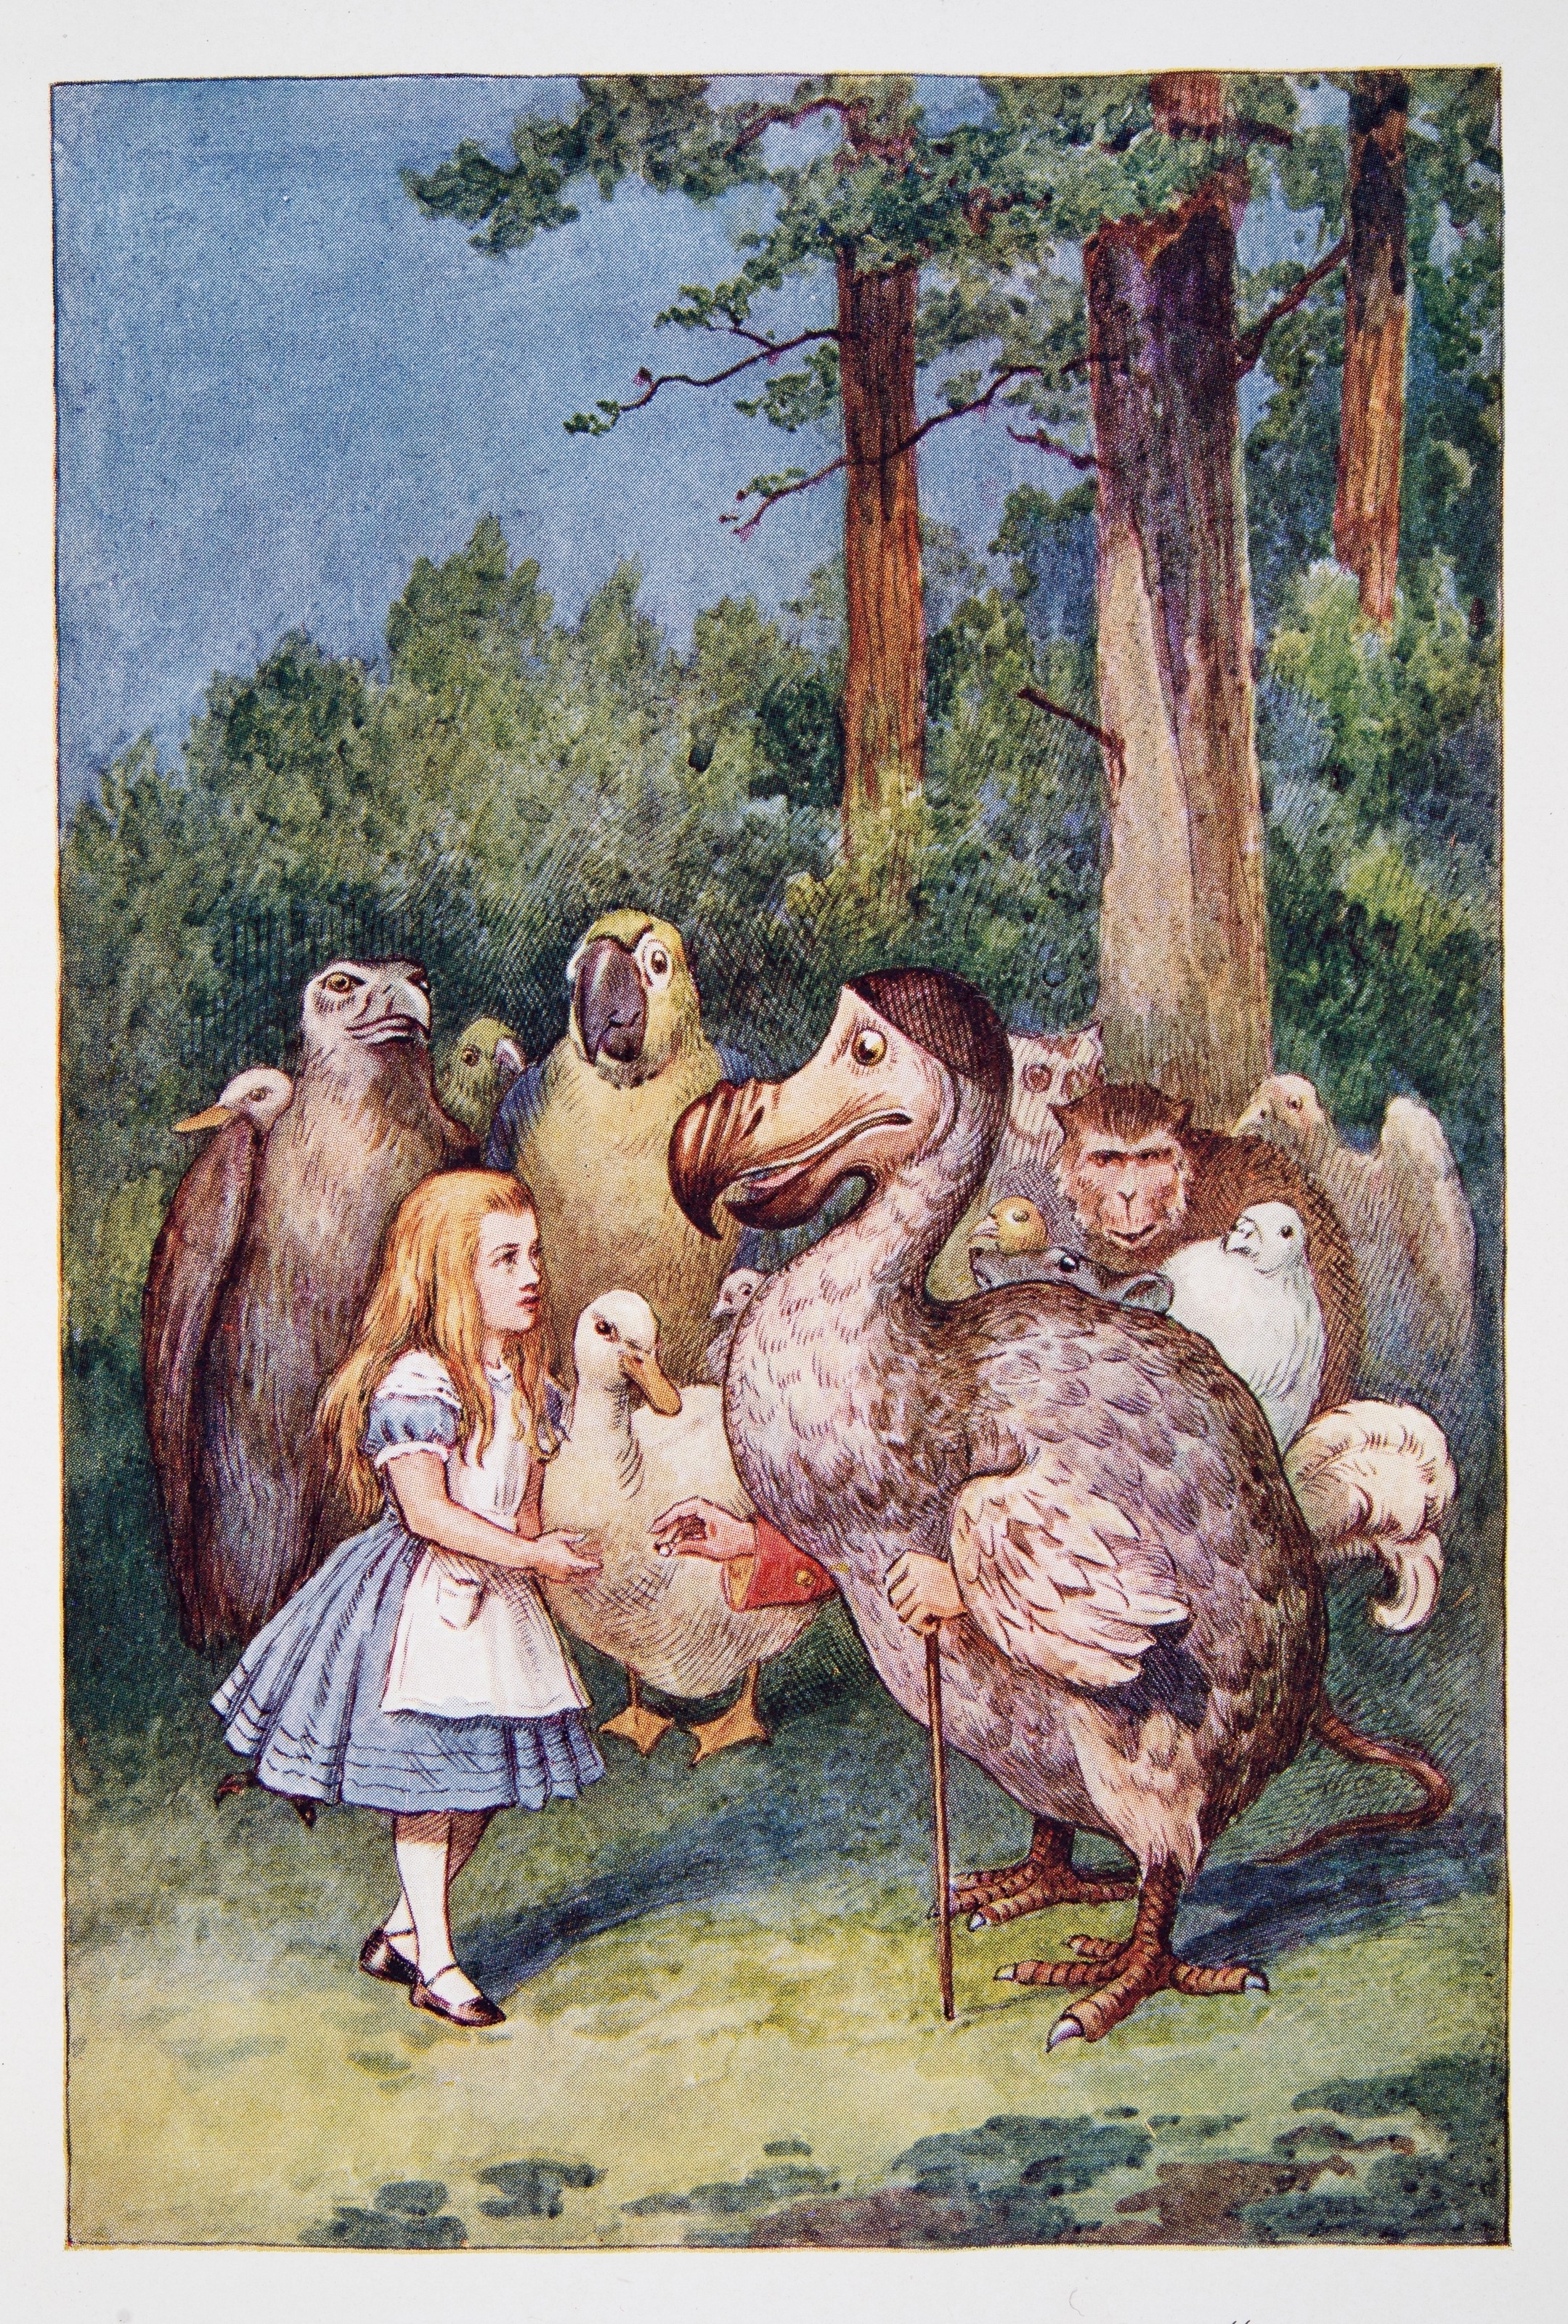 Alice in Wonderland with the Dodo colo Framed Tile